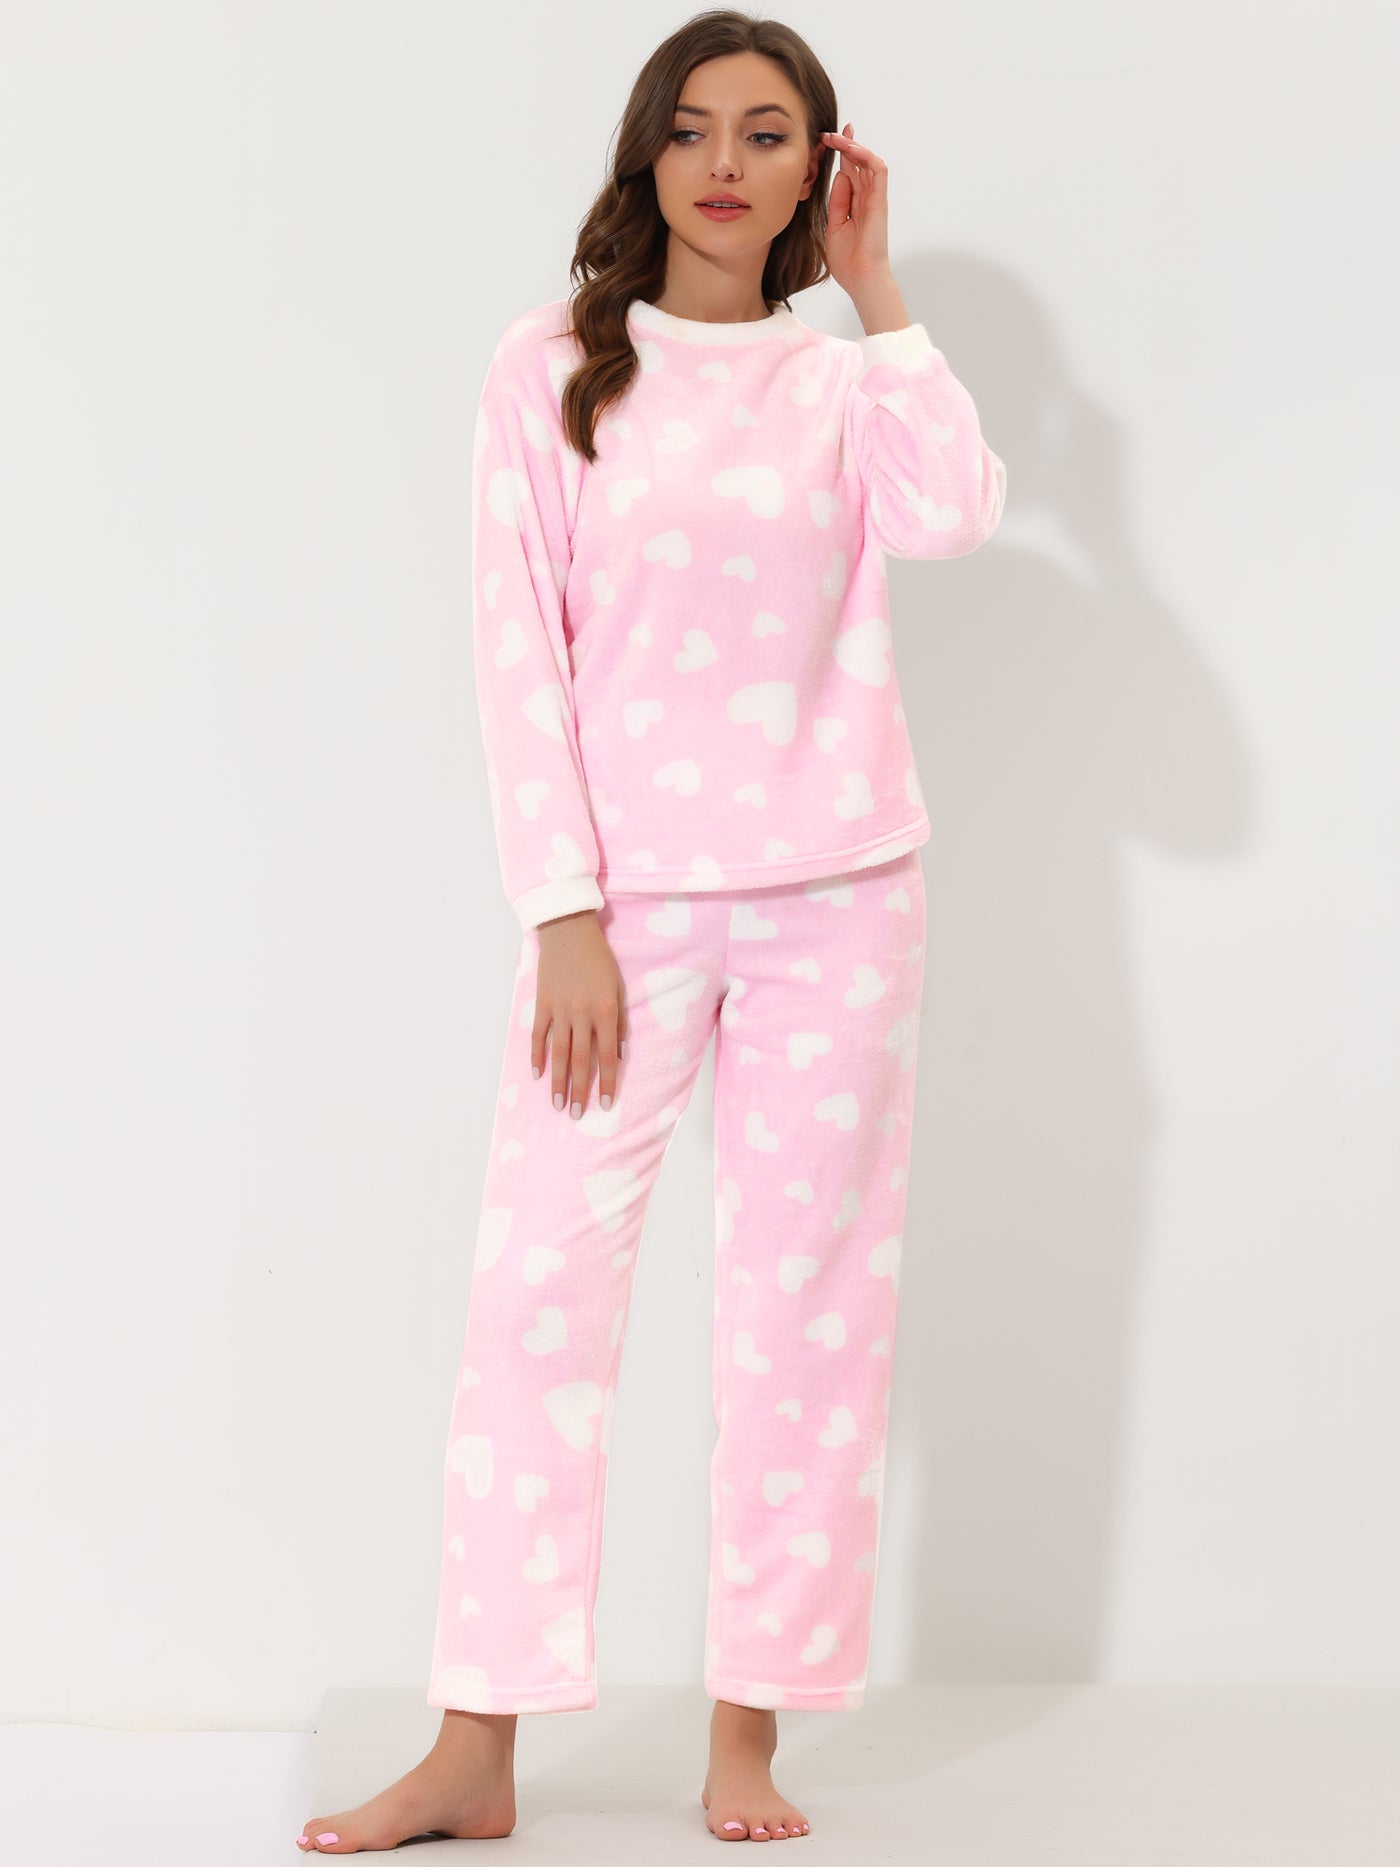 Bublédon Women's Sleepwear Flannel Warm Plush Fleece Pajamas Set